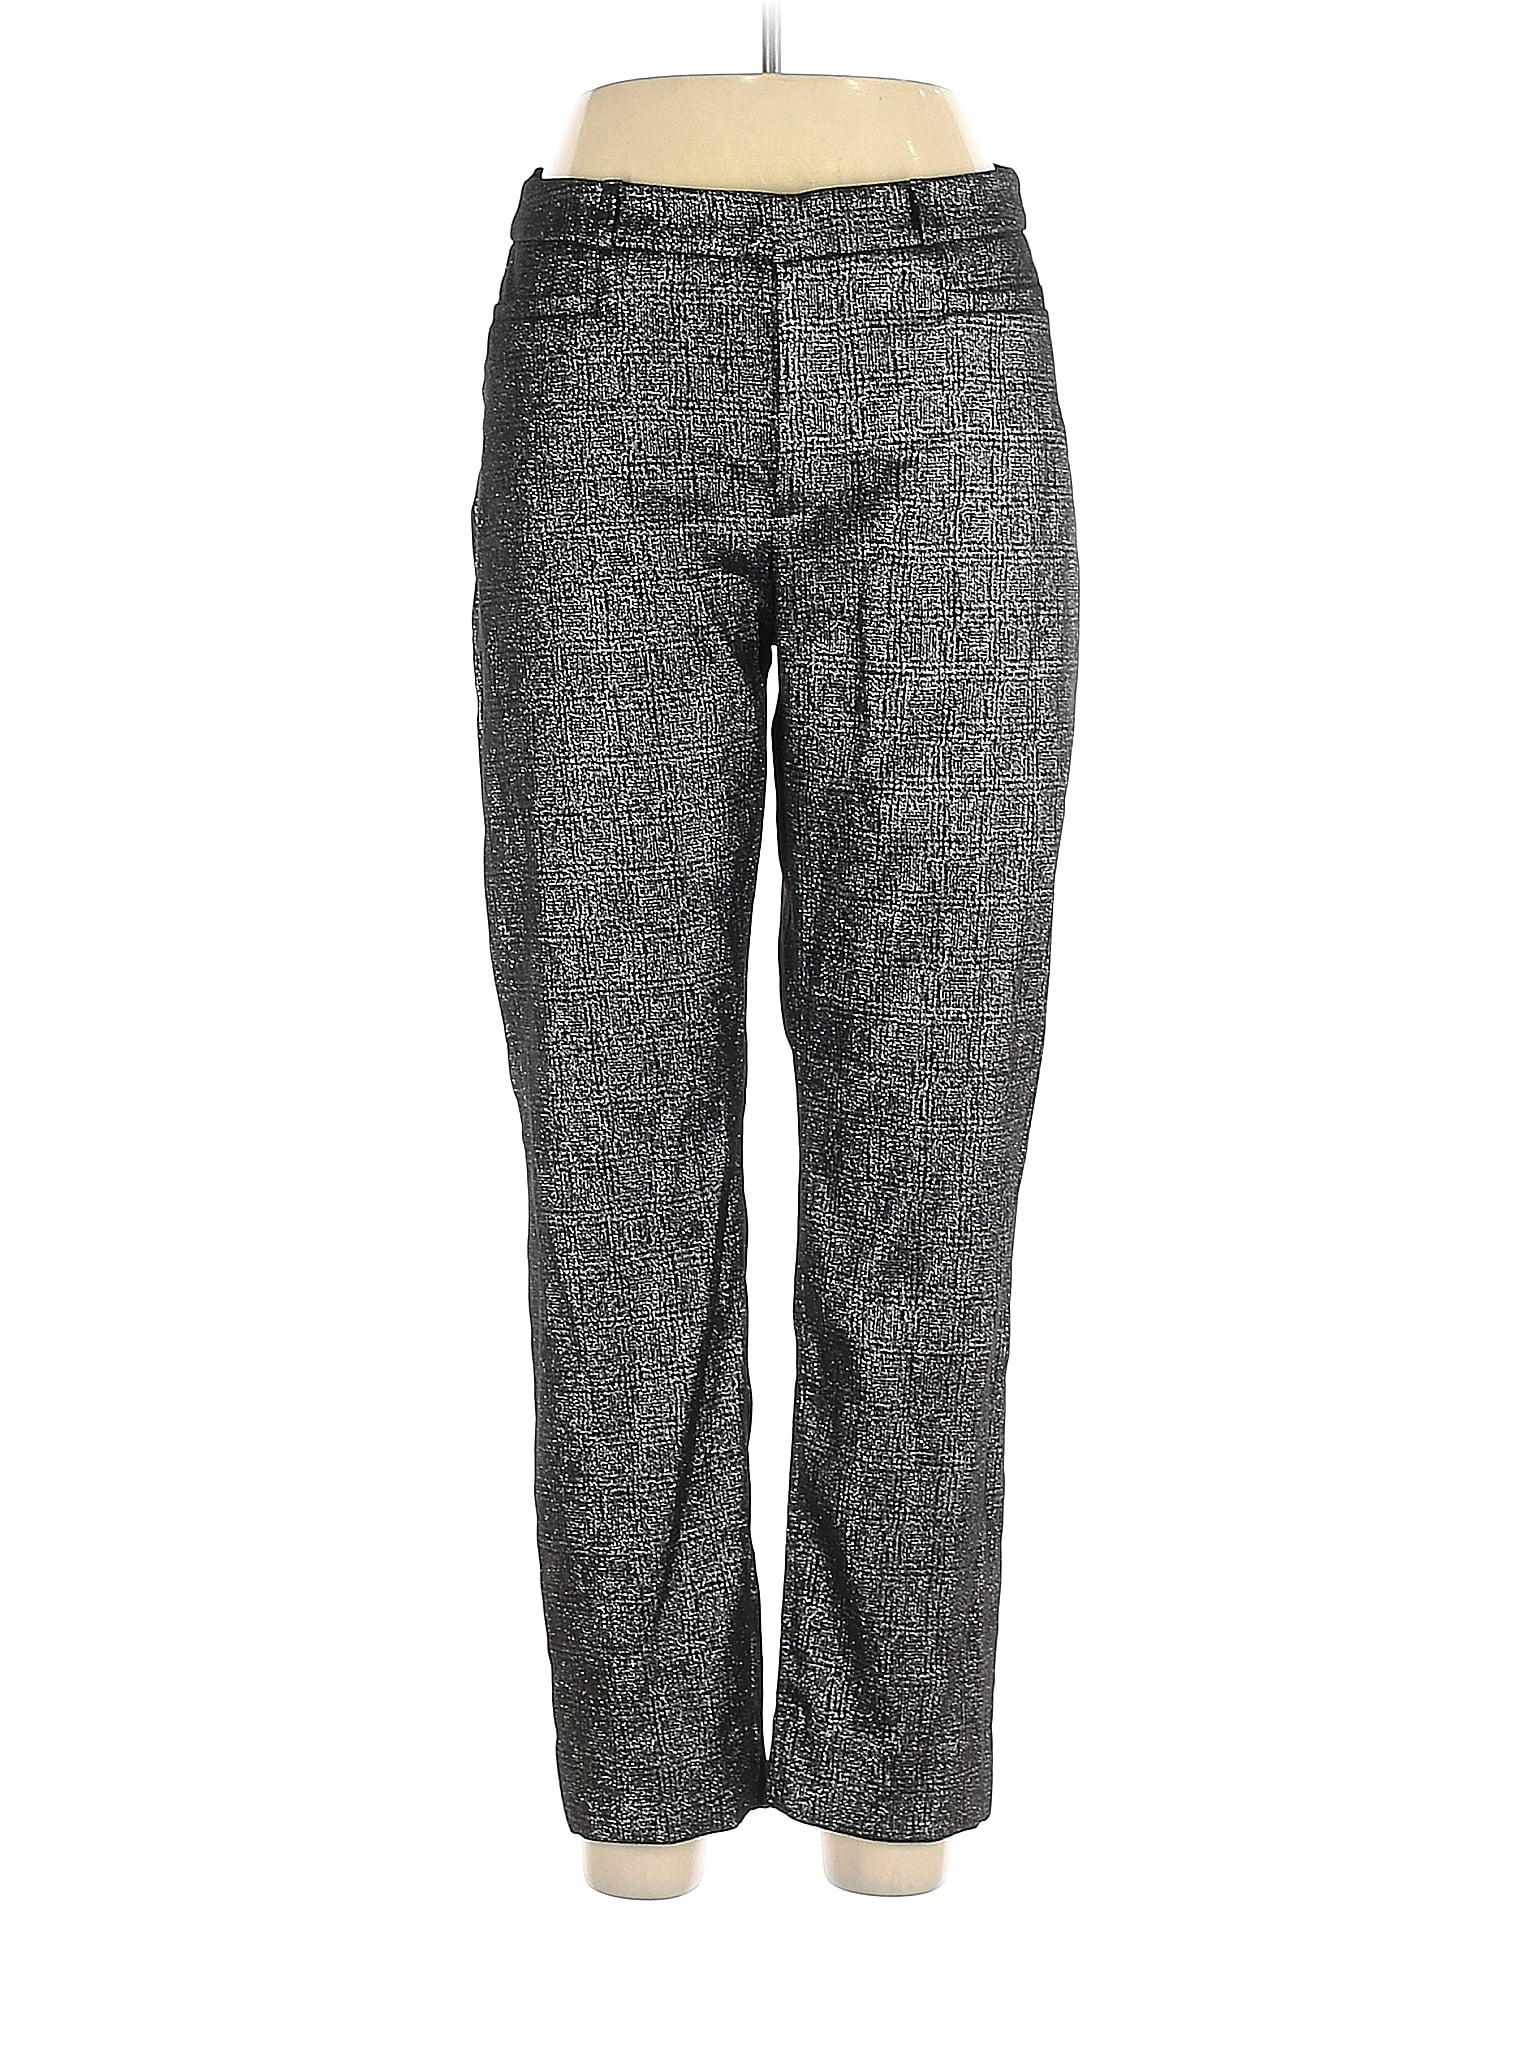 Banana Republic Leopard Print Gray Silver Dress Pants Size 10 - 82% off ...